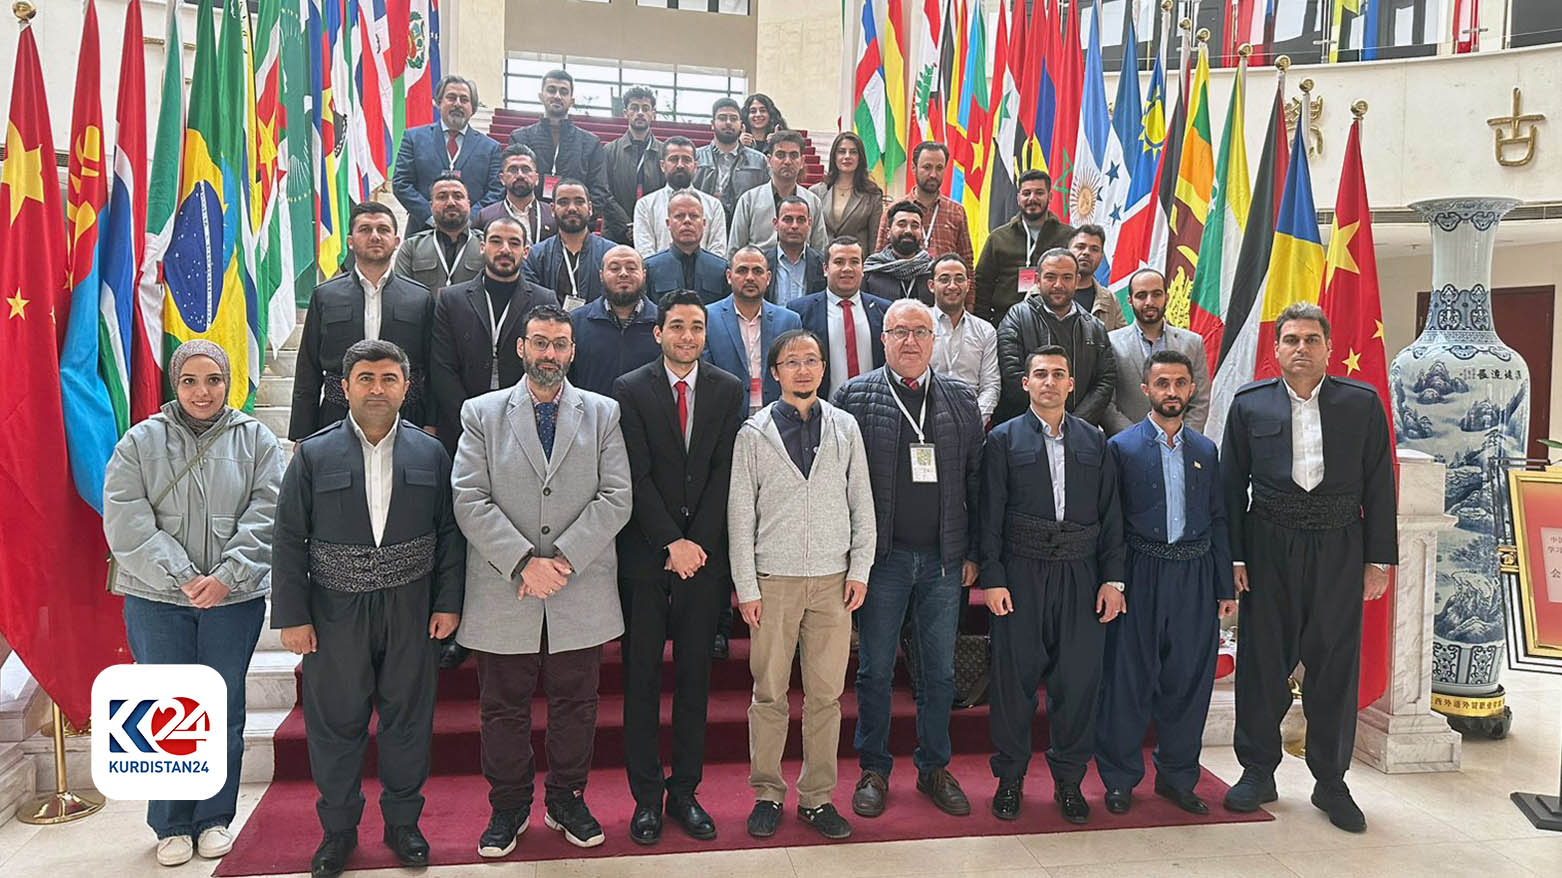 The delegation of 17 individuals, known as "Kurdistan Young". (Photo: Kurdistan 24)